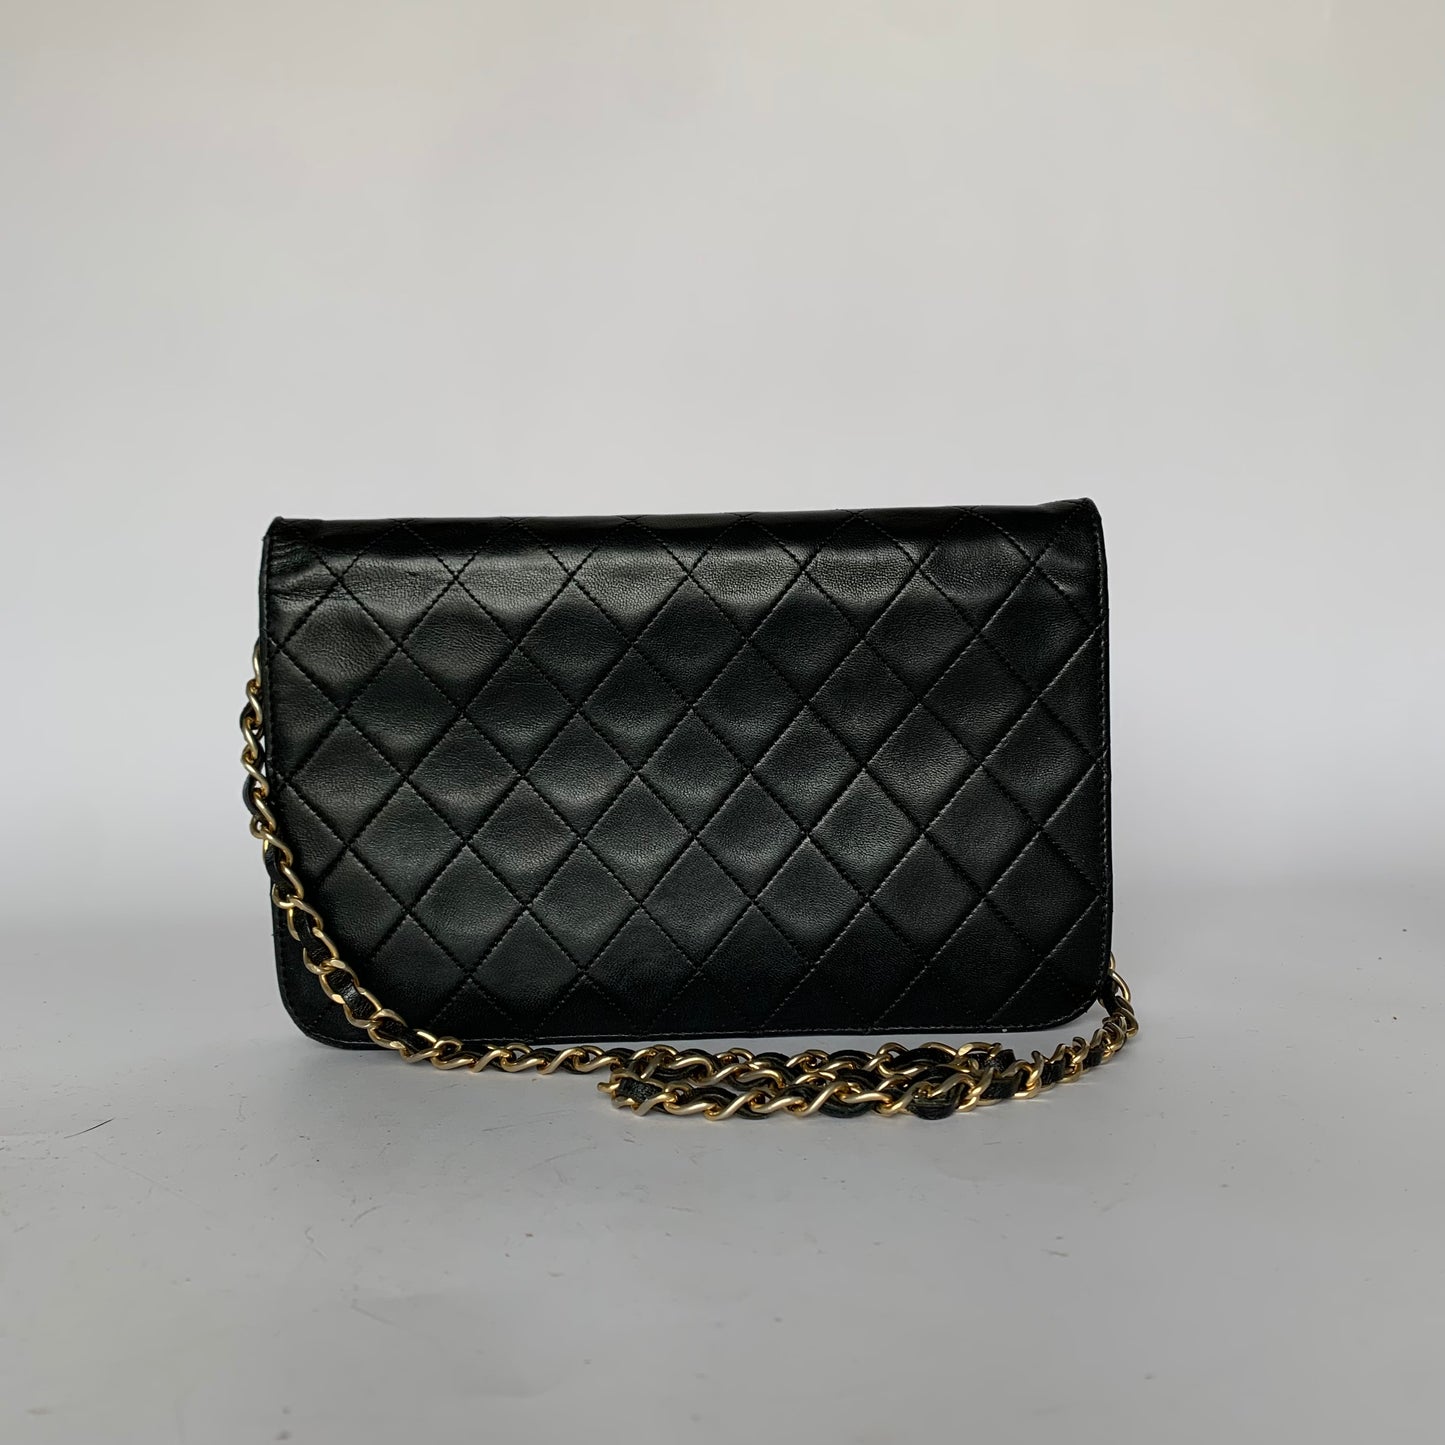 Chanel Chanel Single Flap Bag Lambskin Leather - Shoulder bag - Etoile Luxury Vintage